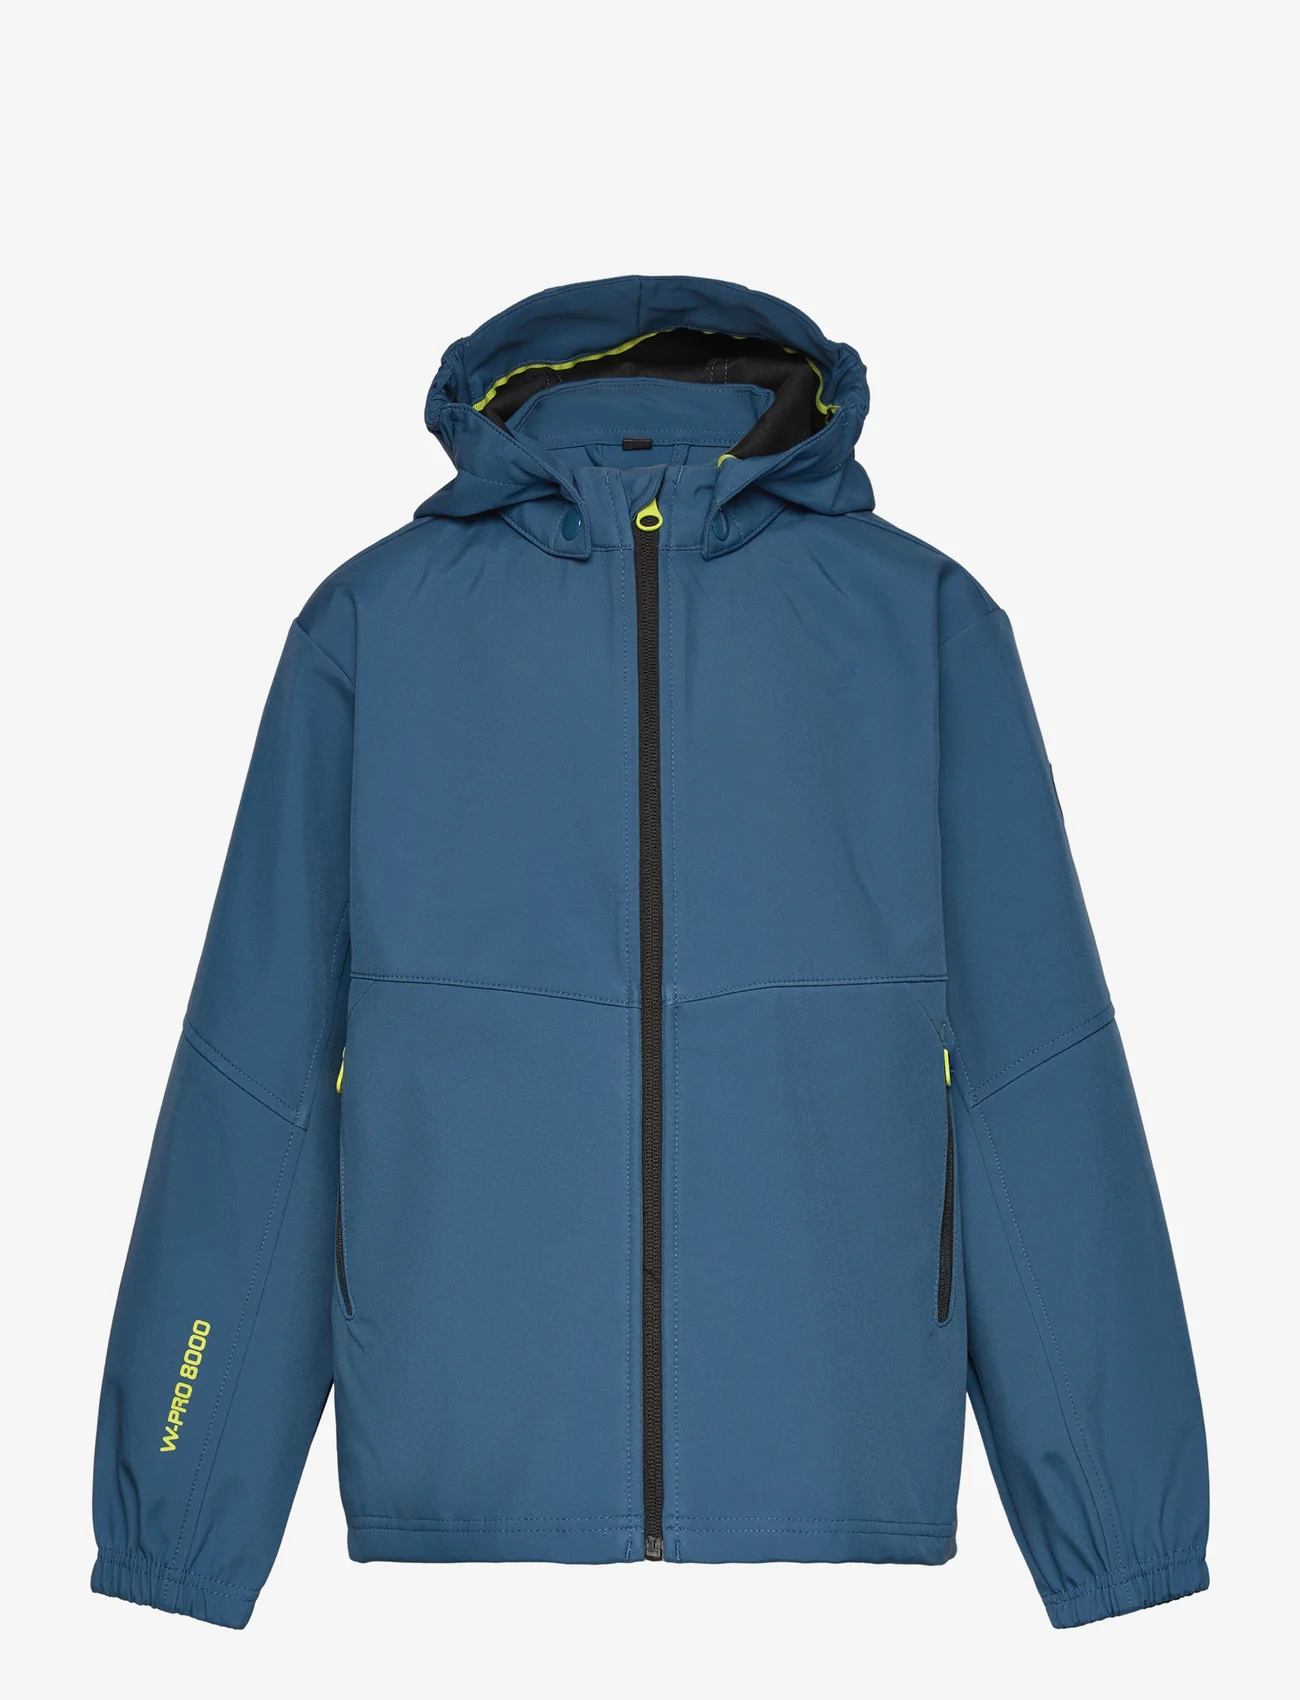 ZigZag - Troy Softshell Jacket W-PRO 8000 - kinder - dark blue - 0